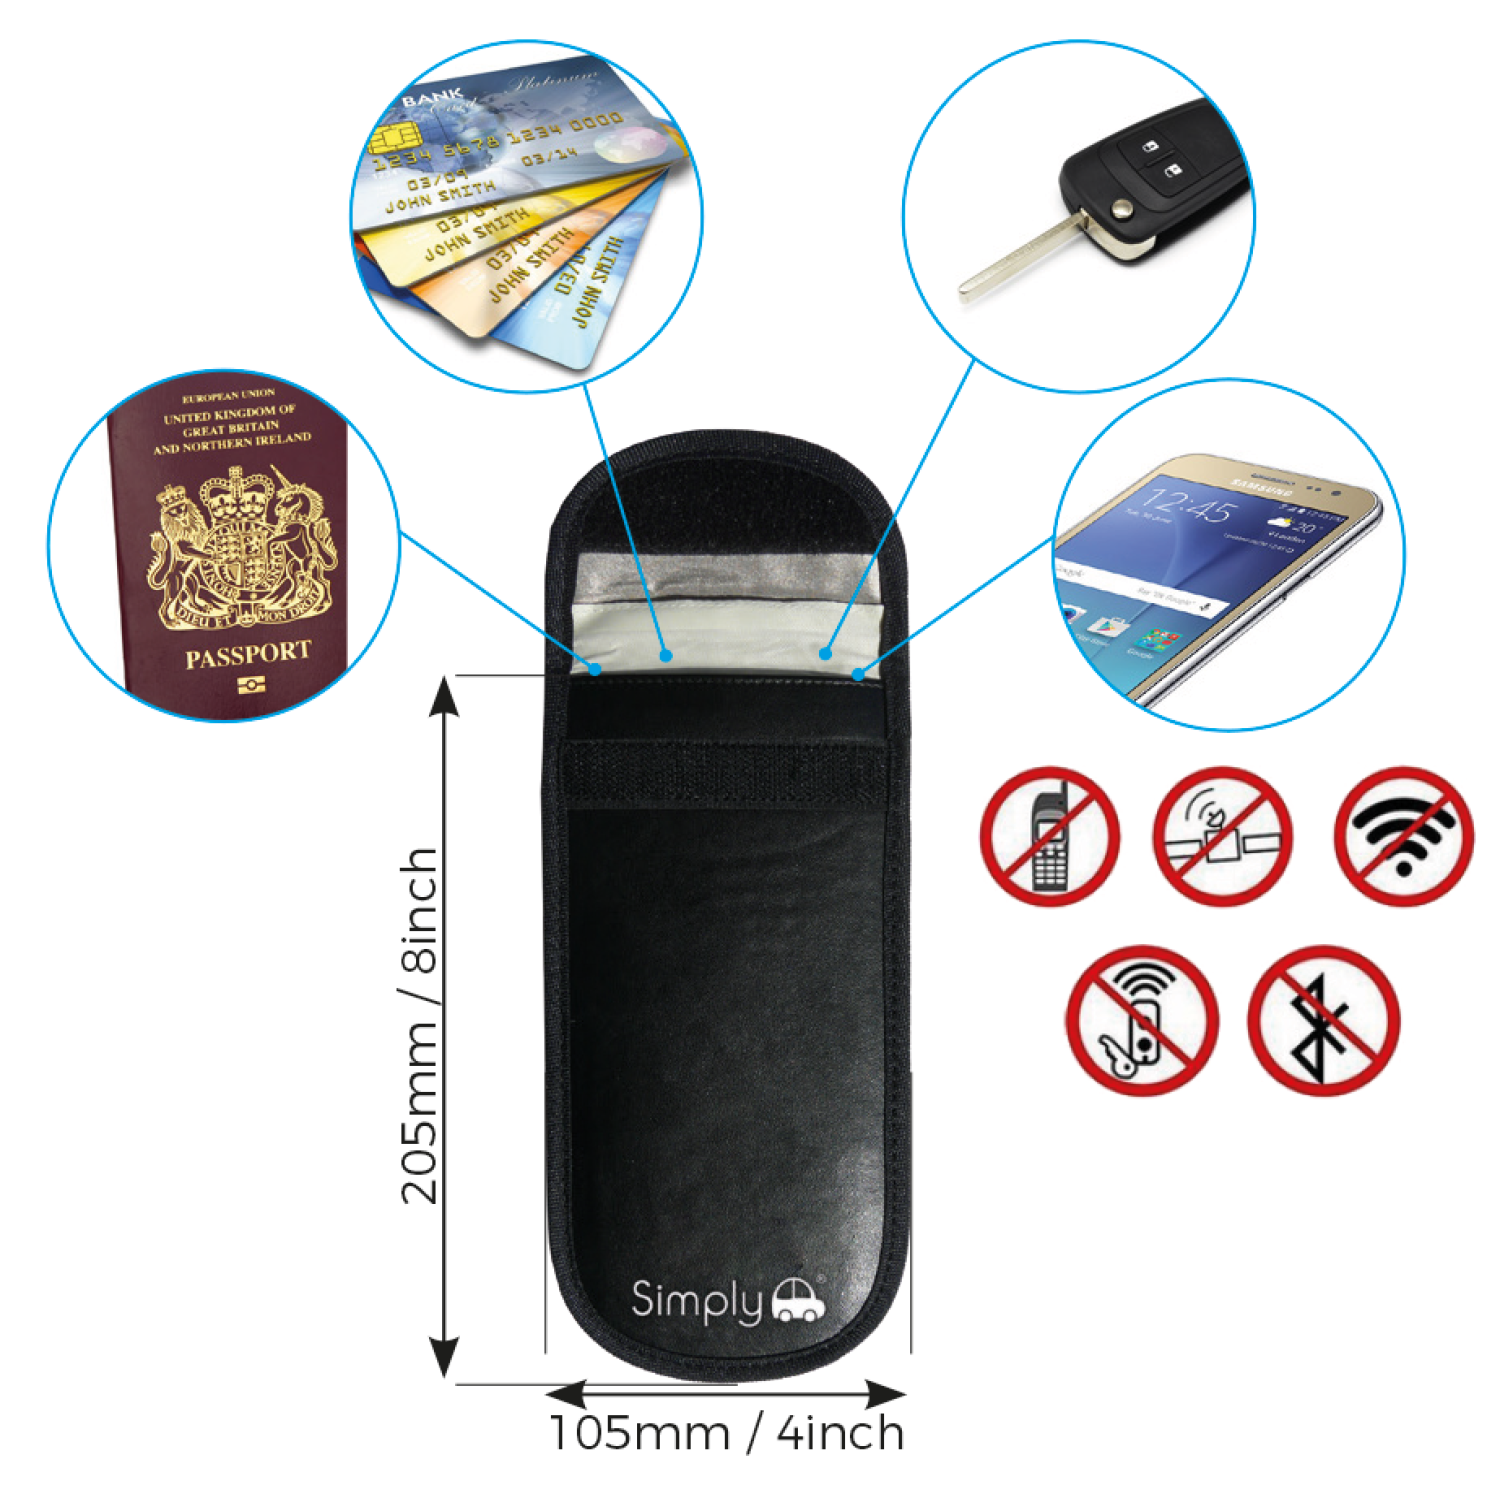 Simply Auto RFID KEY & PHONE BLOCKER - RFID01